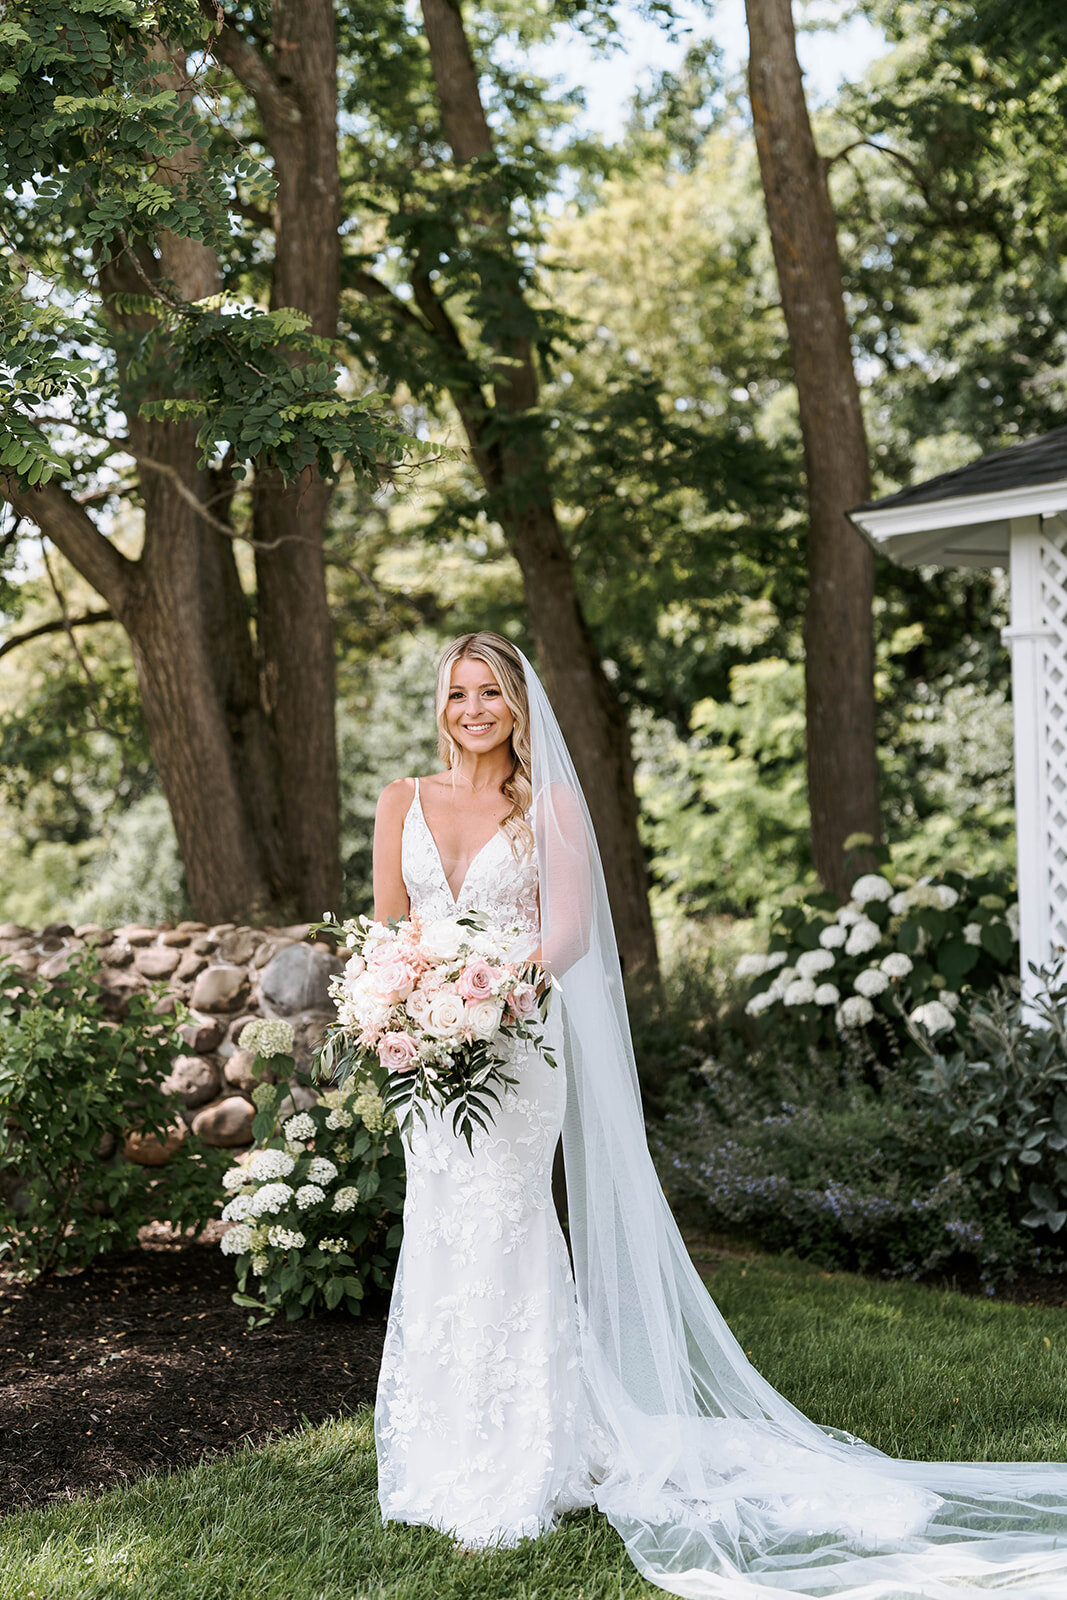 garden formal bridal portrait at outdoor wedding venue in upstate new york